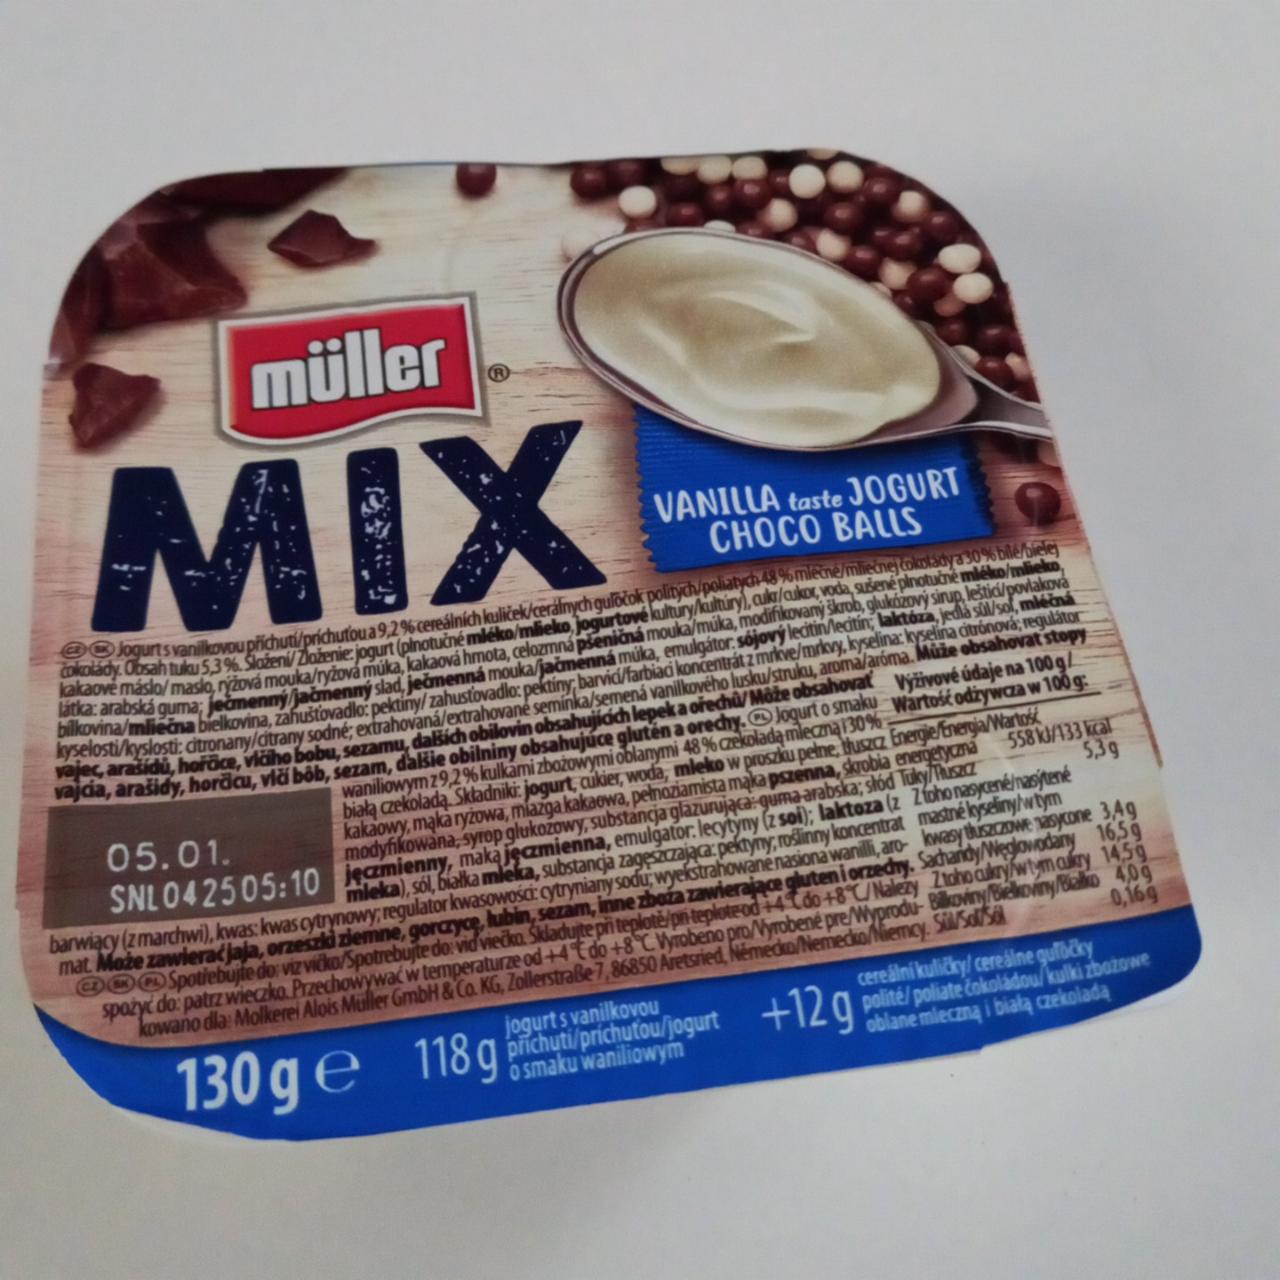 Zdjęcia - MIX vanilla taste jogurt choco balls Müller